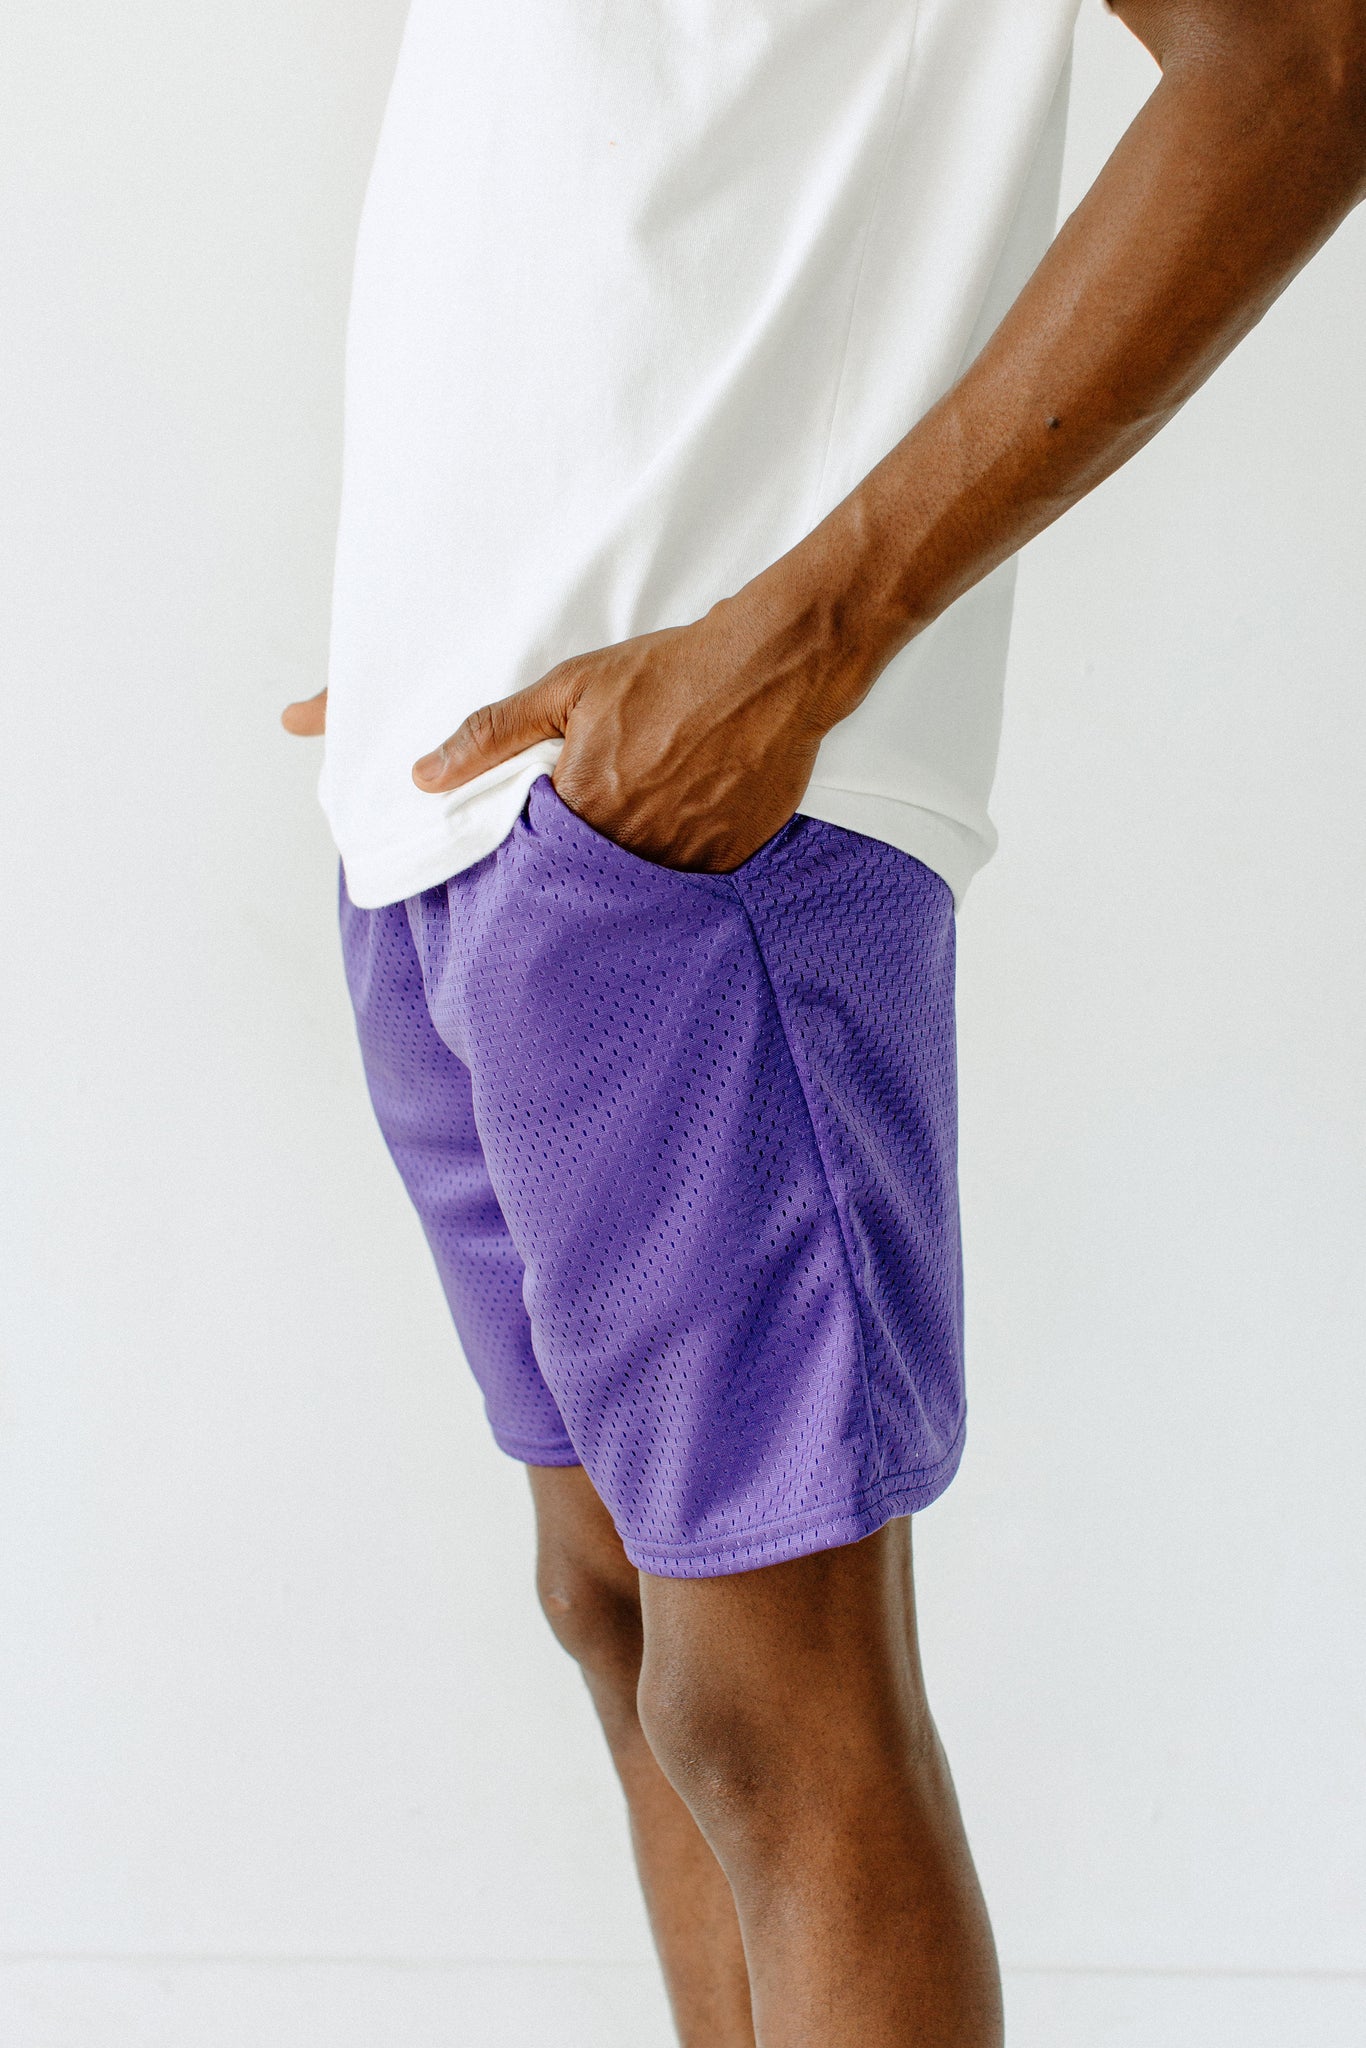 MSPP054 - Unisex Mesh Gym Shorts - Purple